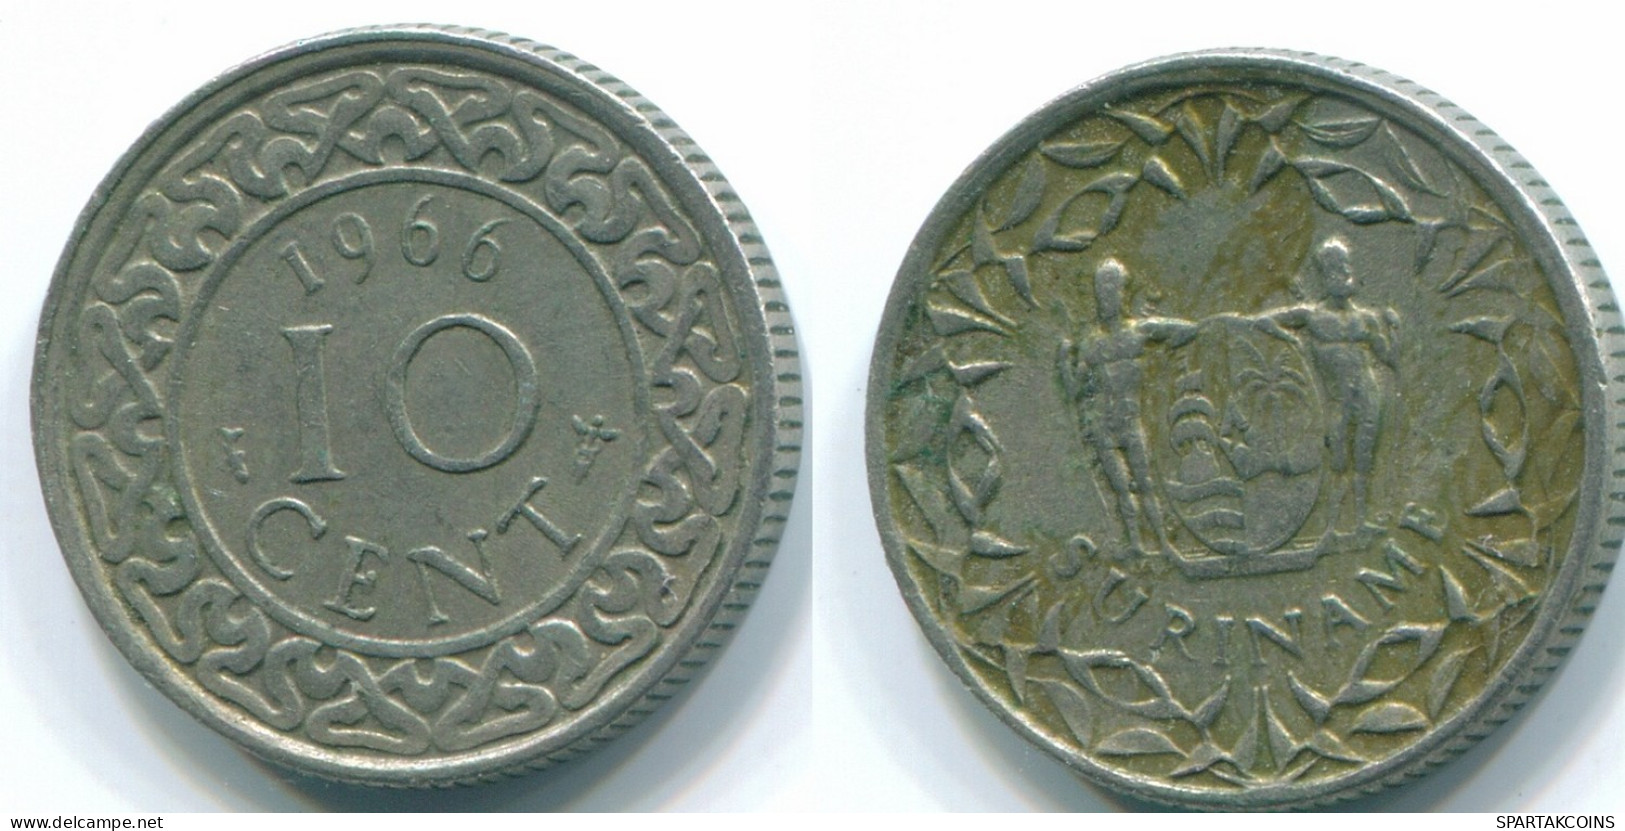 10 CENTS 1966 SURINAME Netherlands Nickel Colonial Coin #S13264.U.A - Suriname 1975 - ...